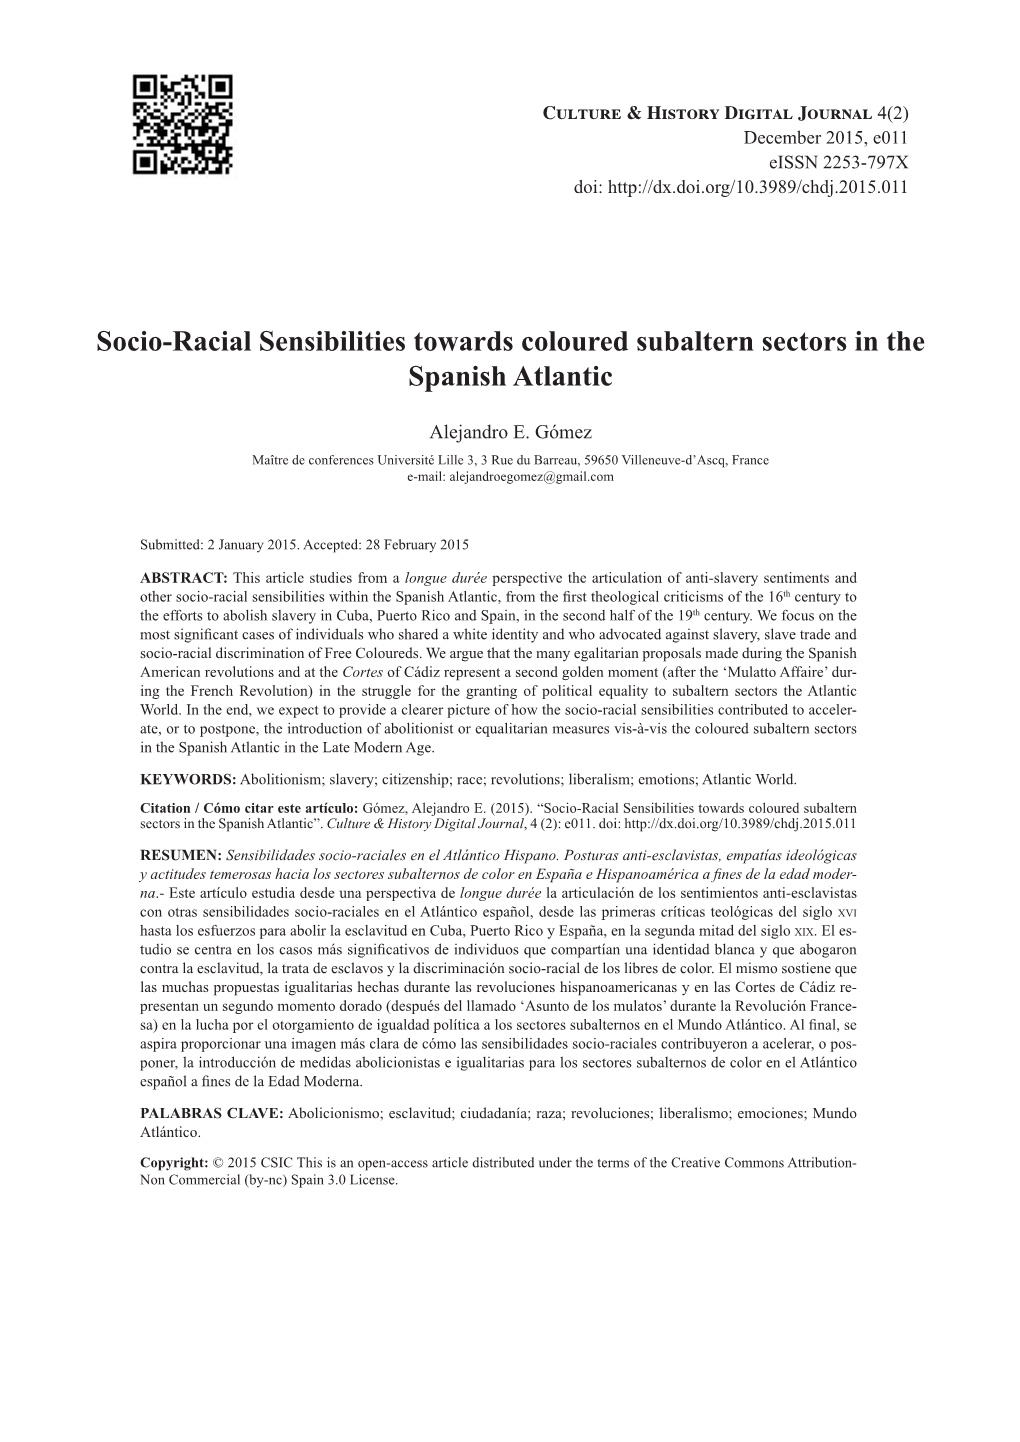 Socio-Racial Sensibilities Towards Coloured Subaltern Sectors in the Spanish Atlantic